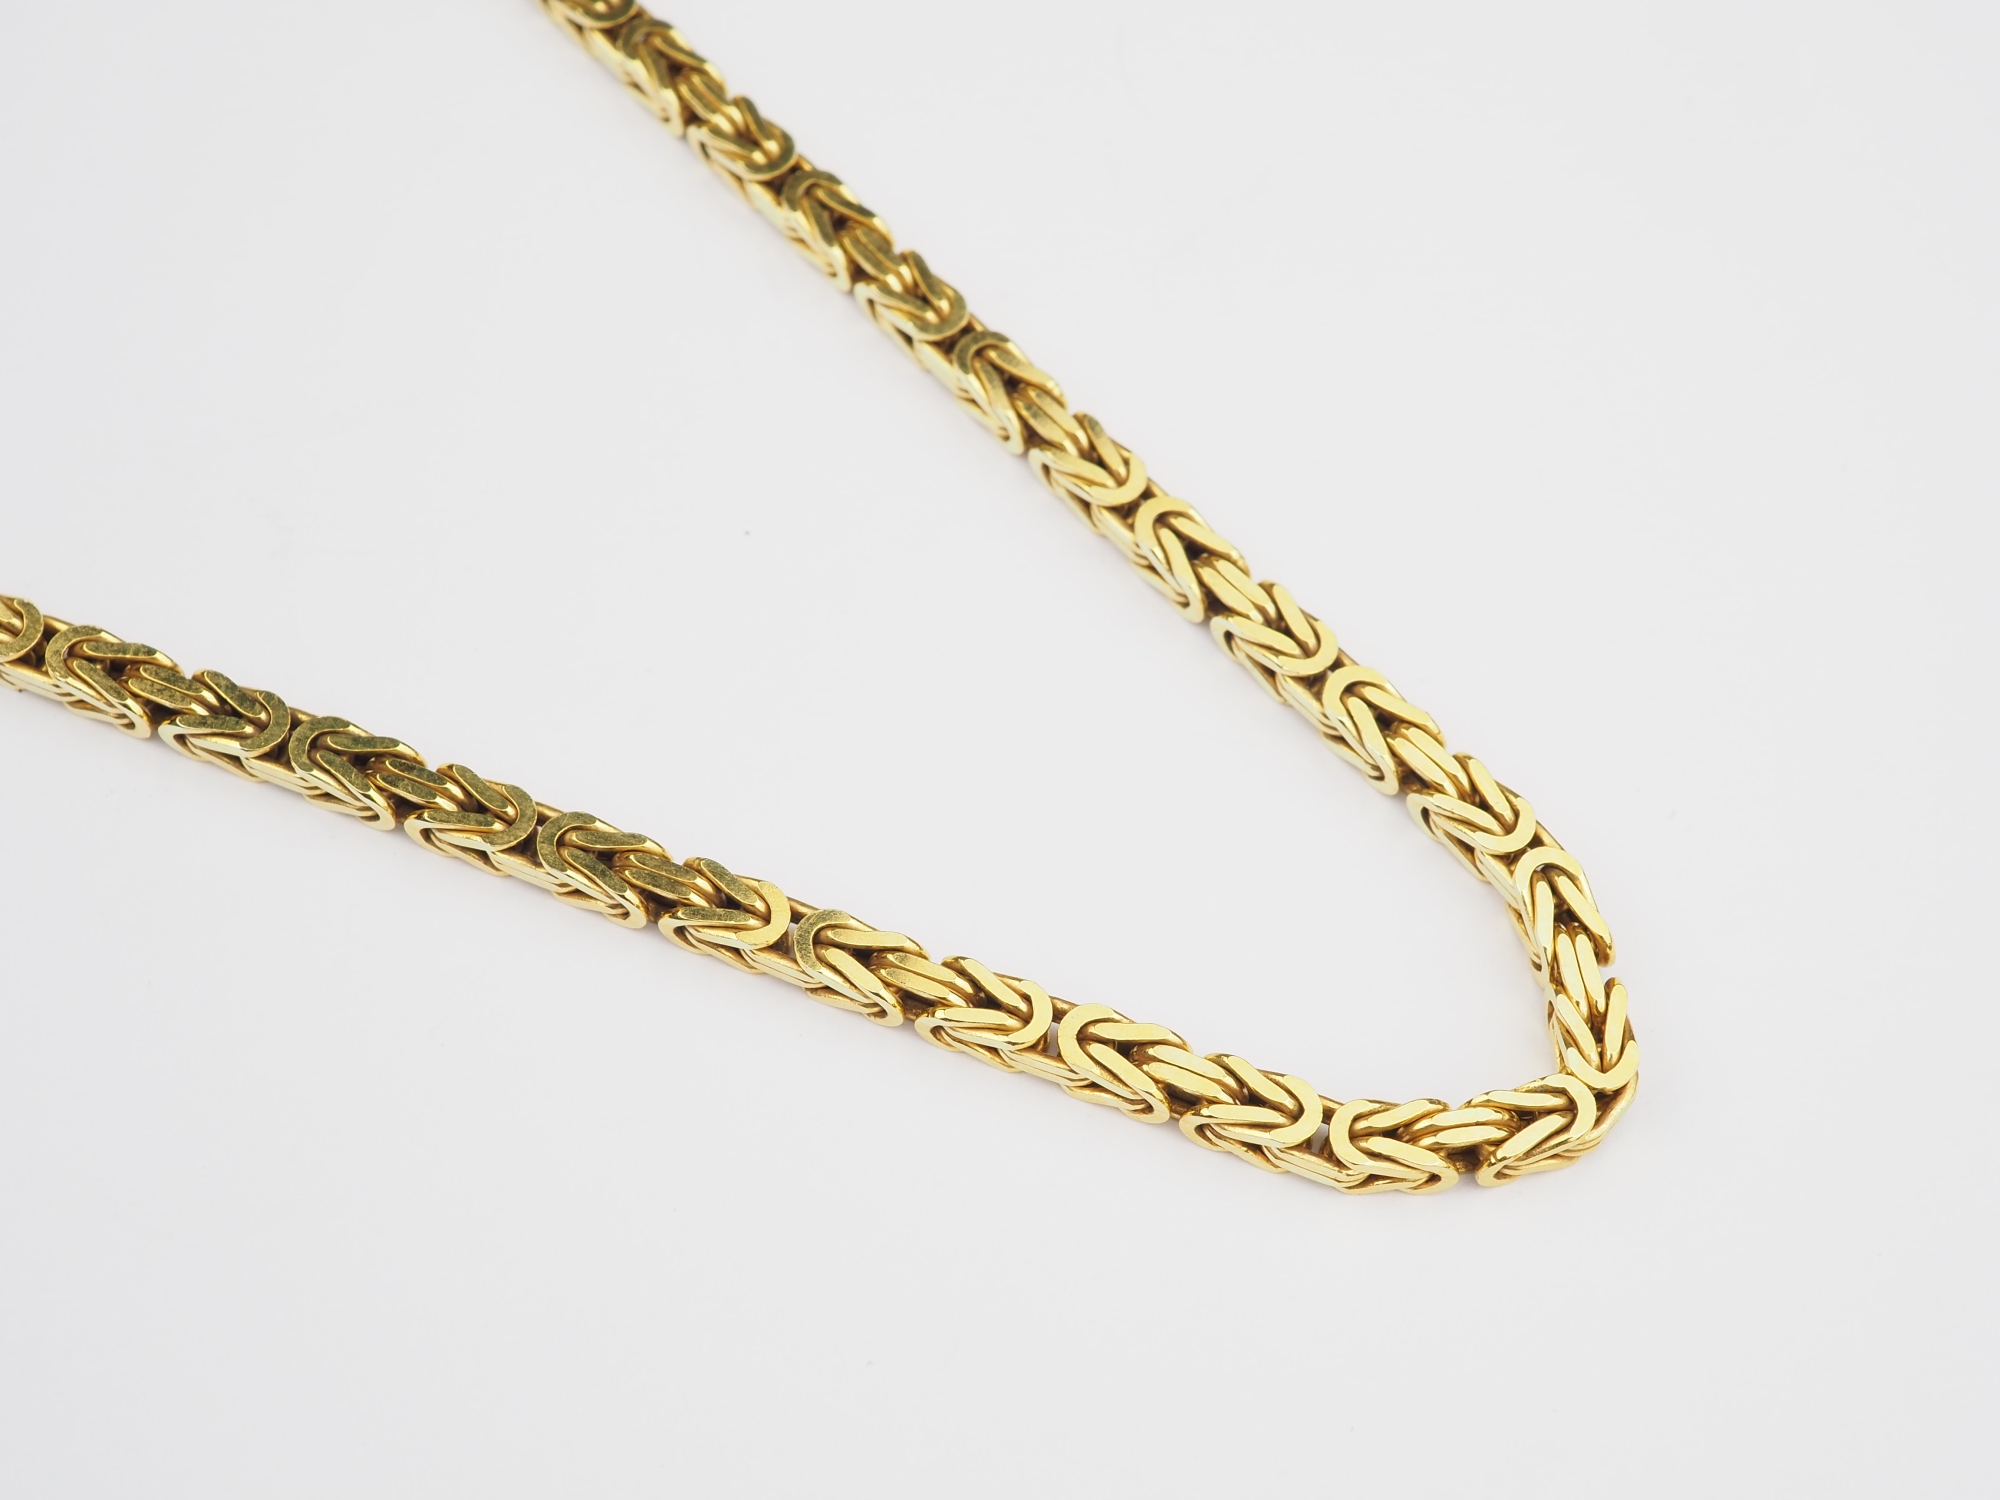 Long Byzantine chain 14K gold, 66.7g - Image 2 of 3